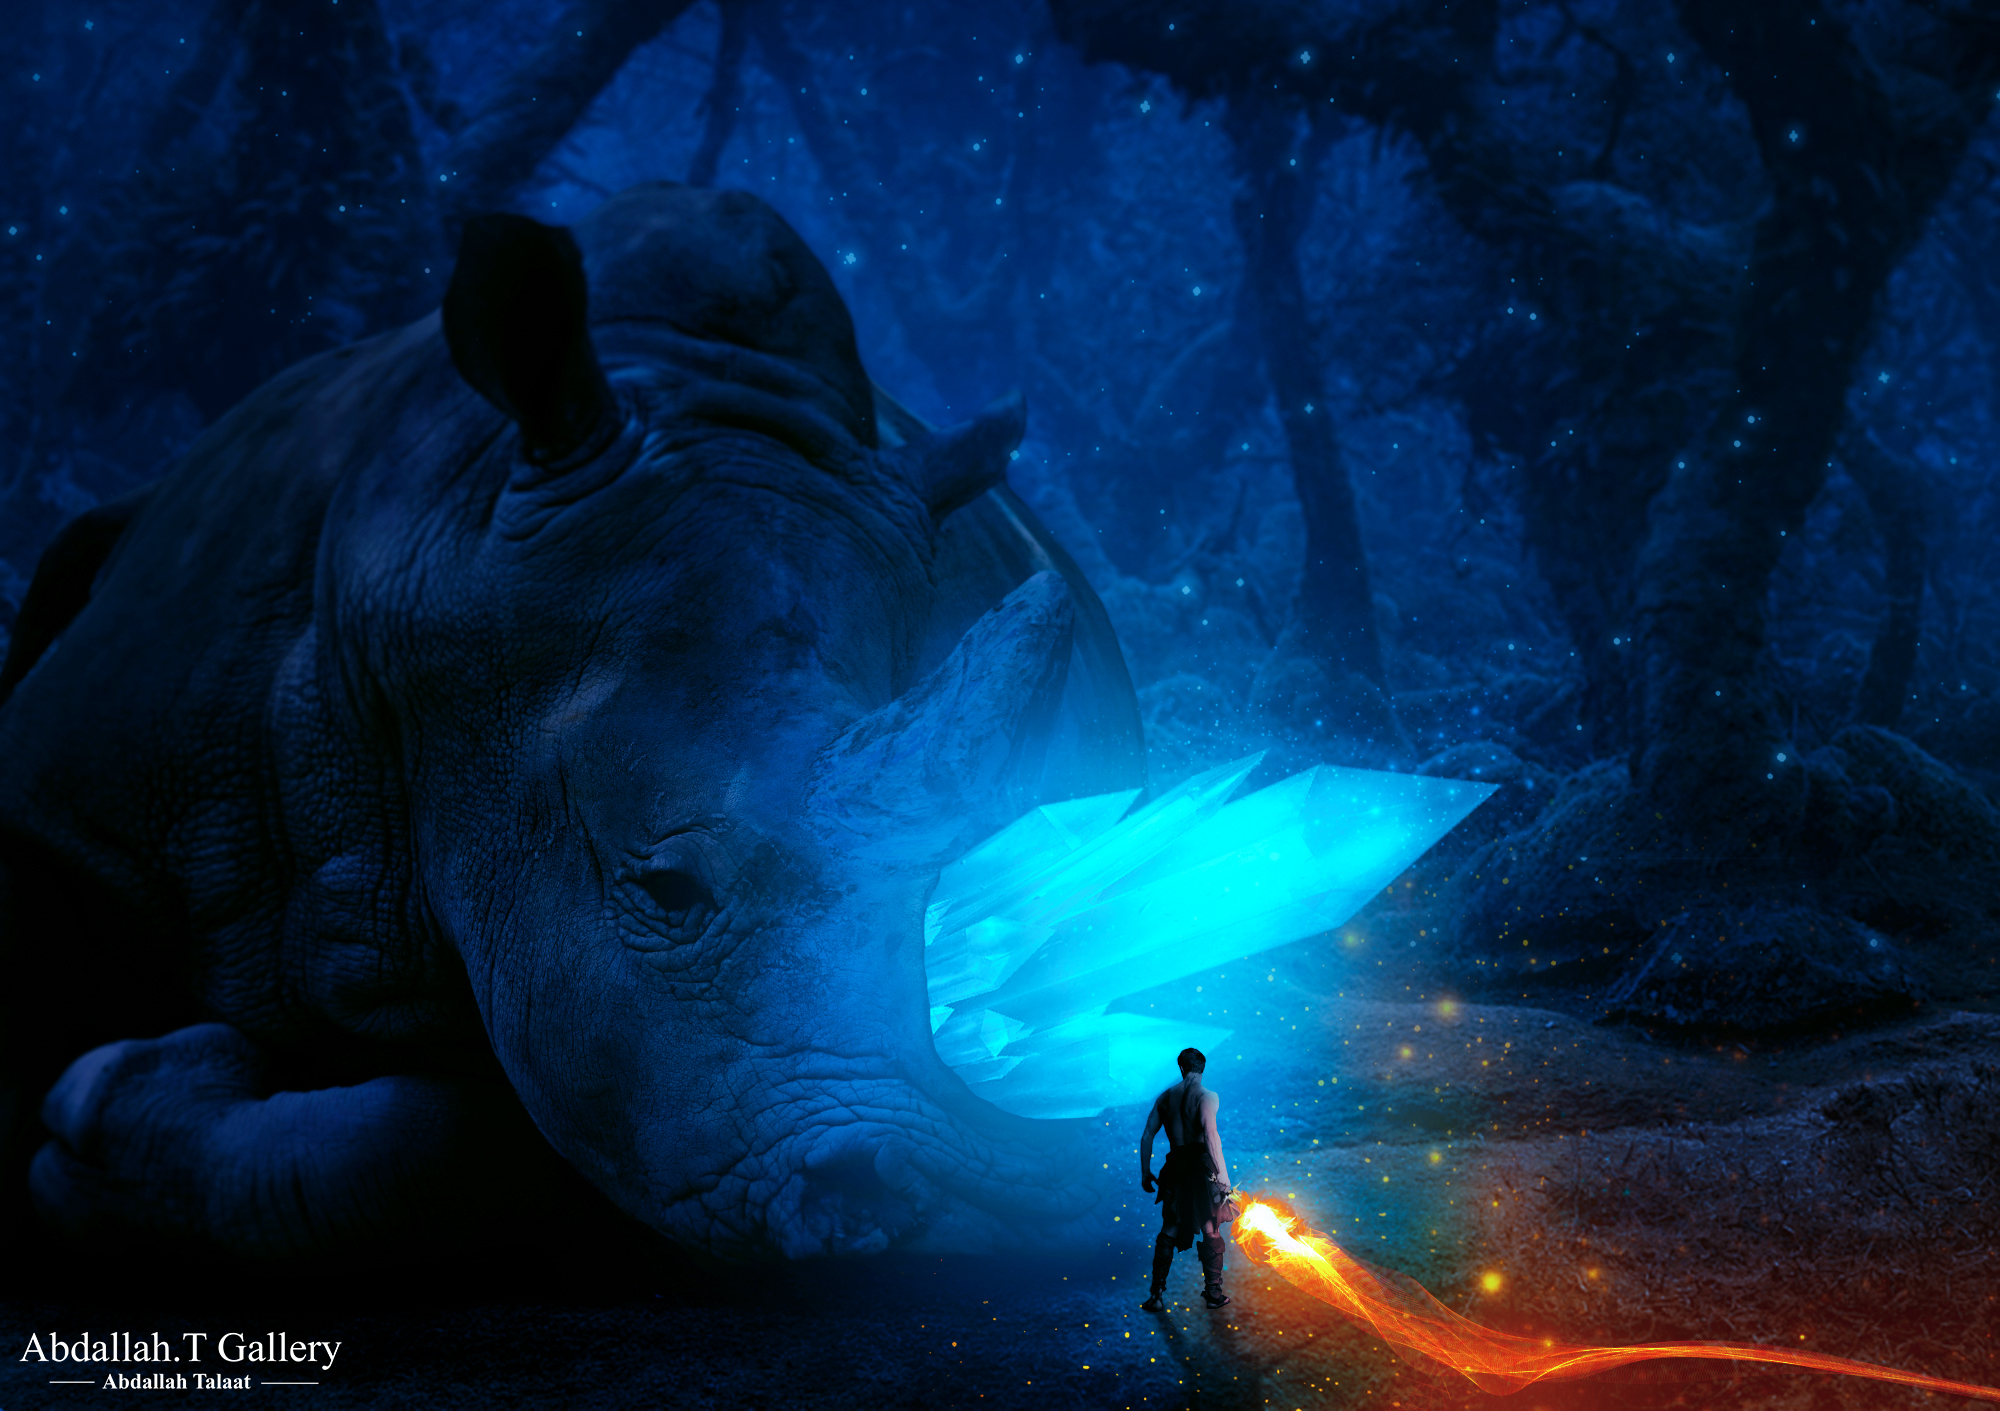 General 2000x1411 rhino warrior fantasy men magic dark night artwork digital art watermarked